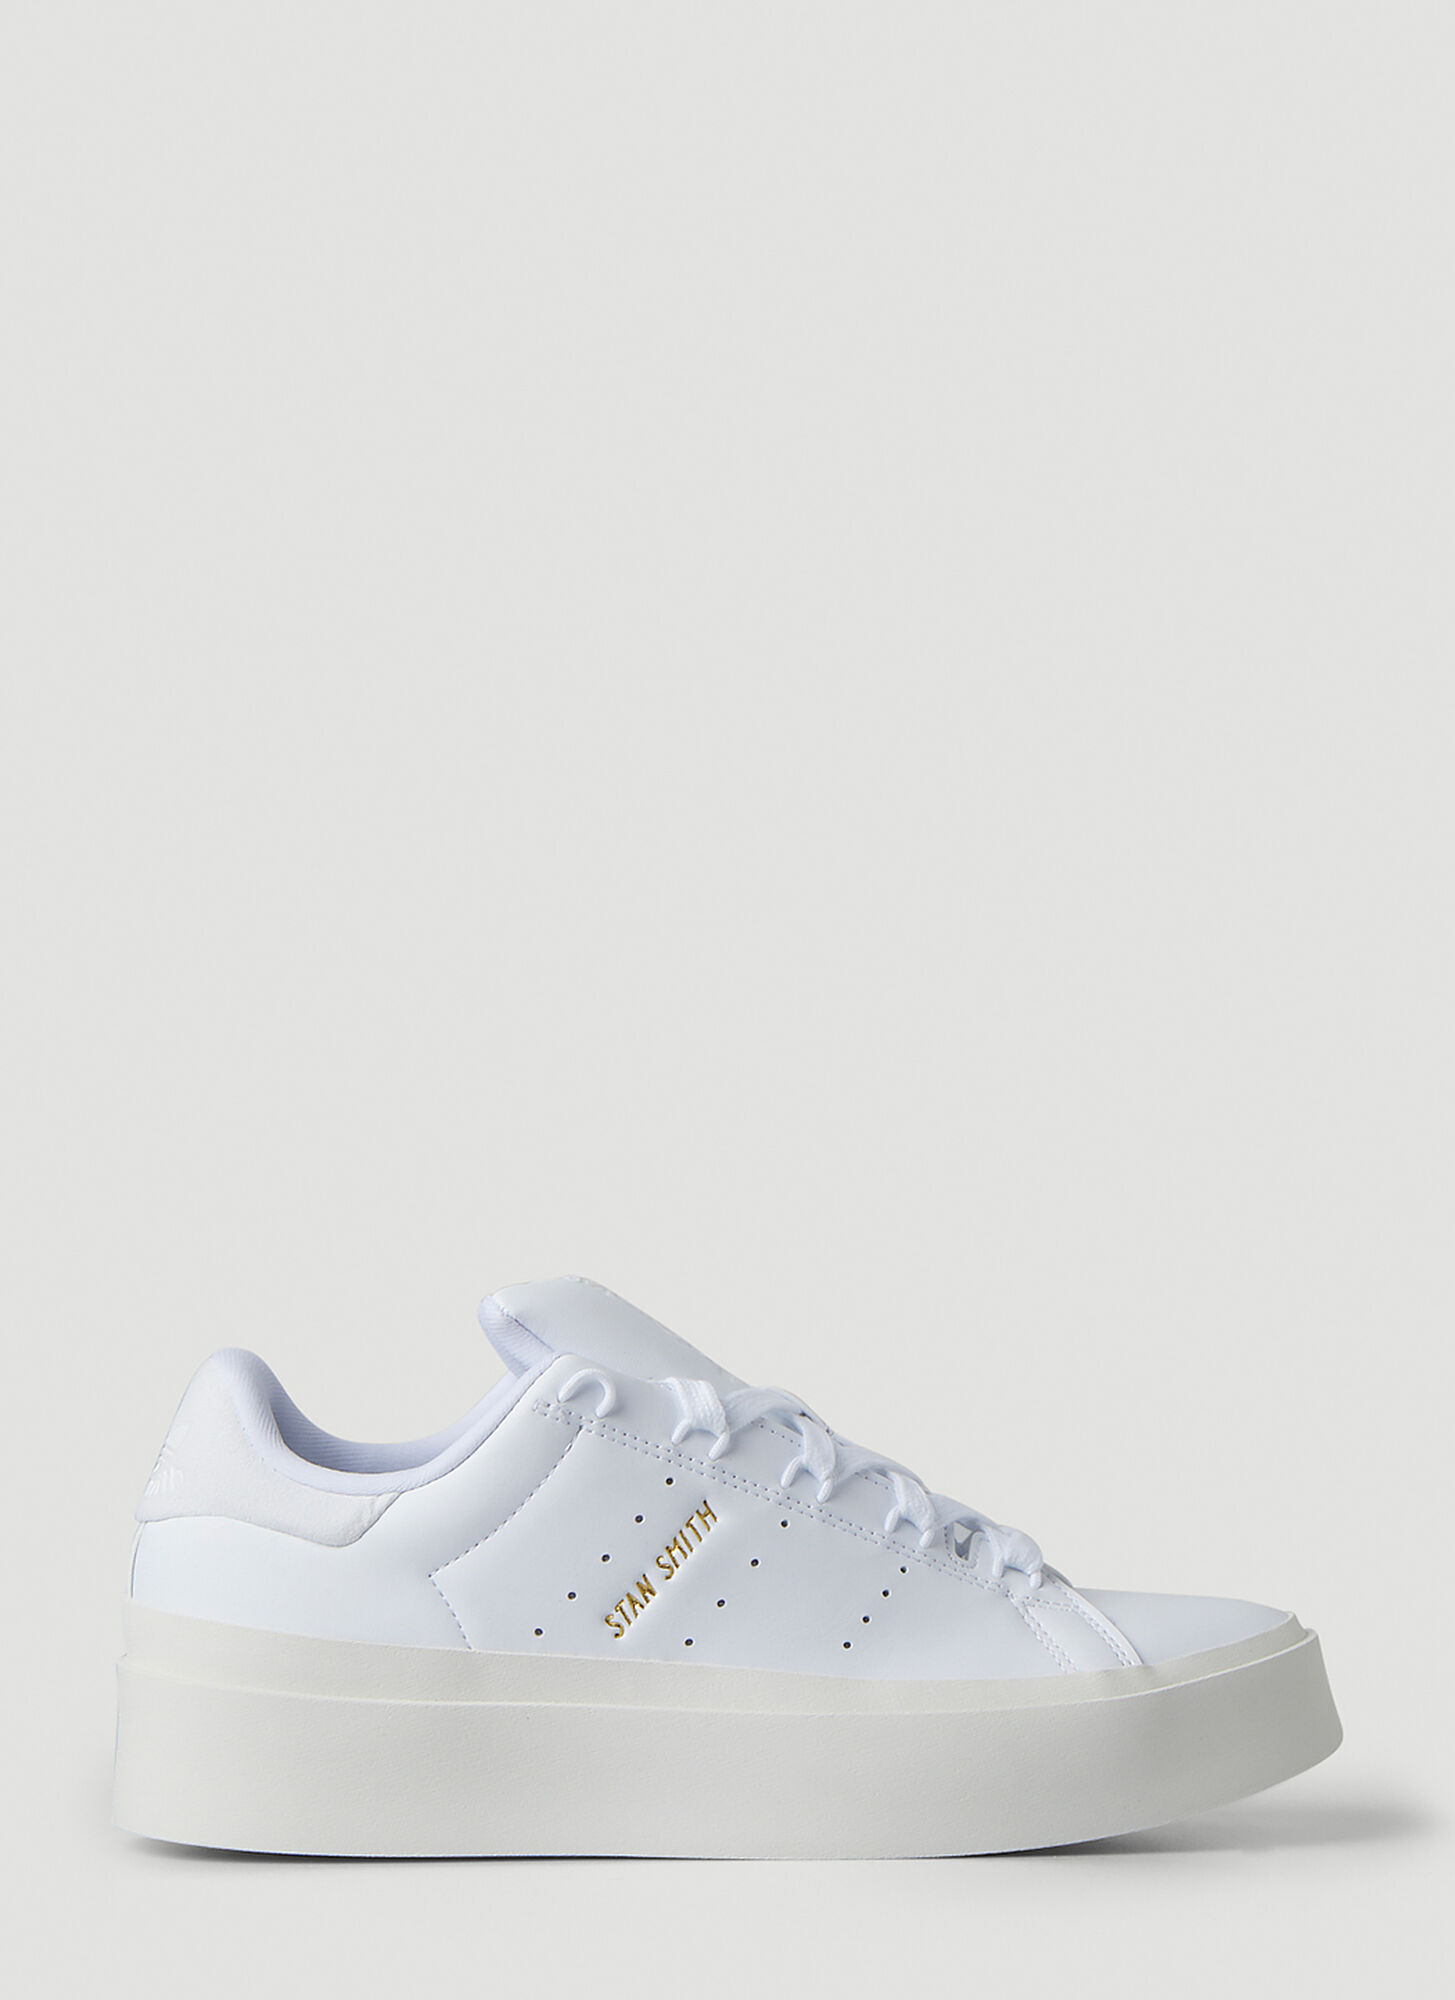 Adidas Originals Stan Smith Bonega Sneakers In White